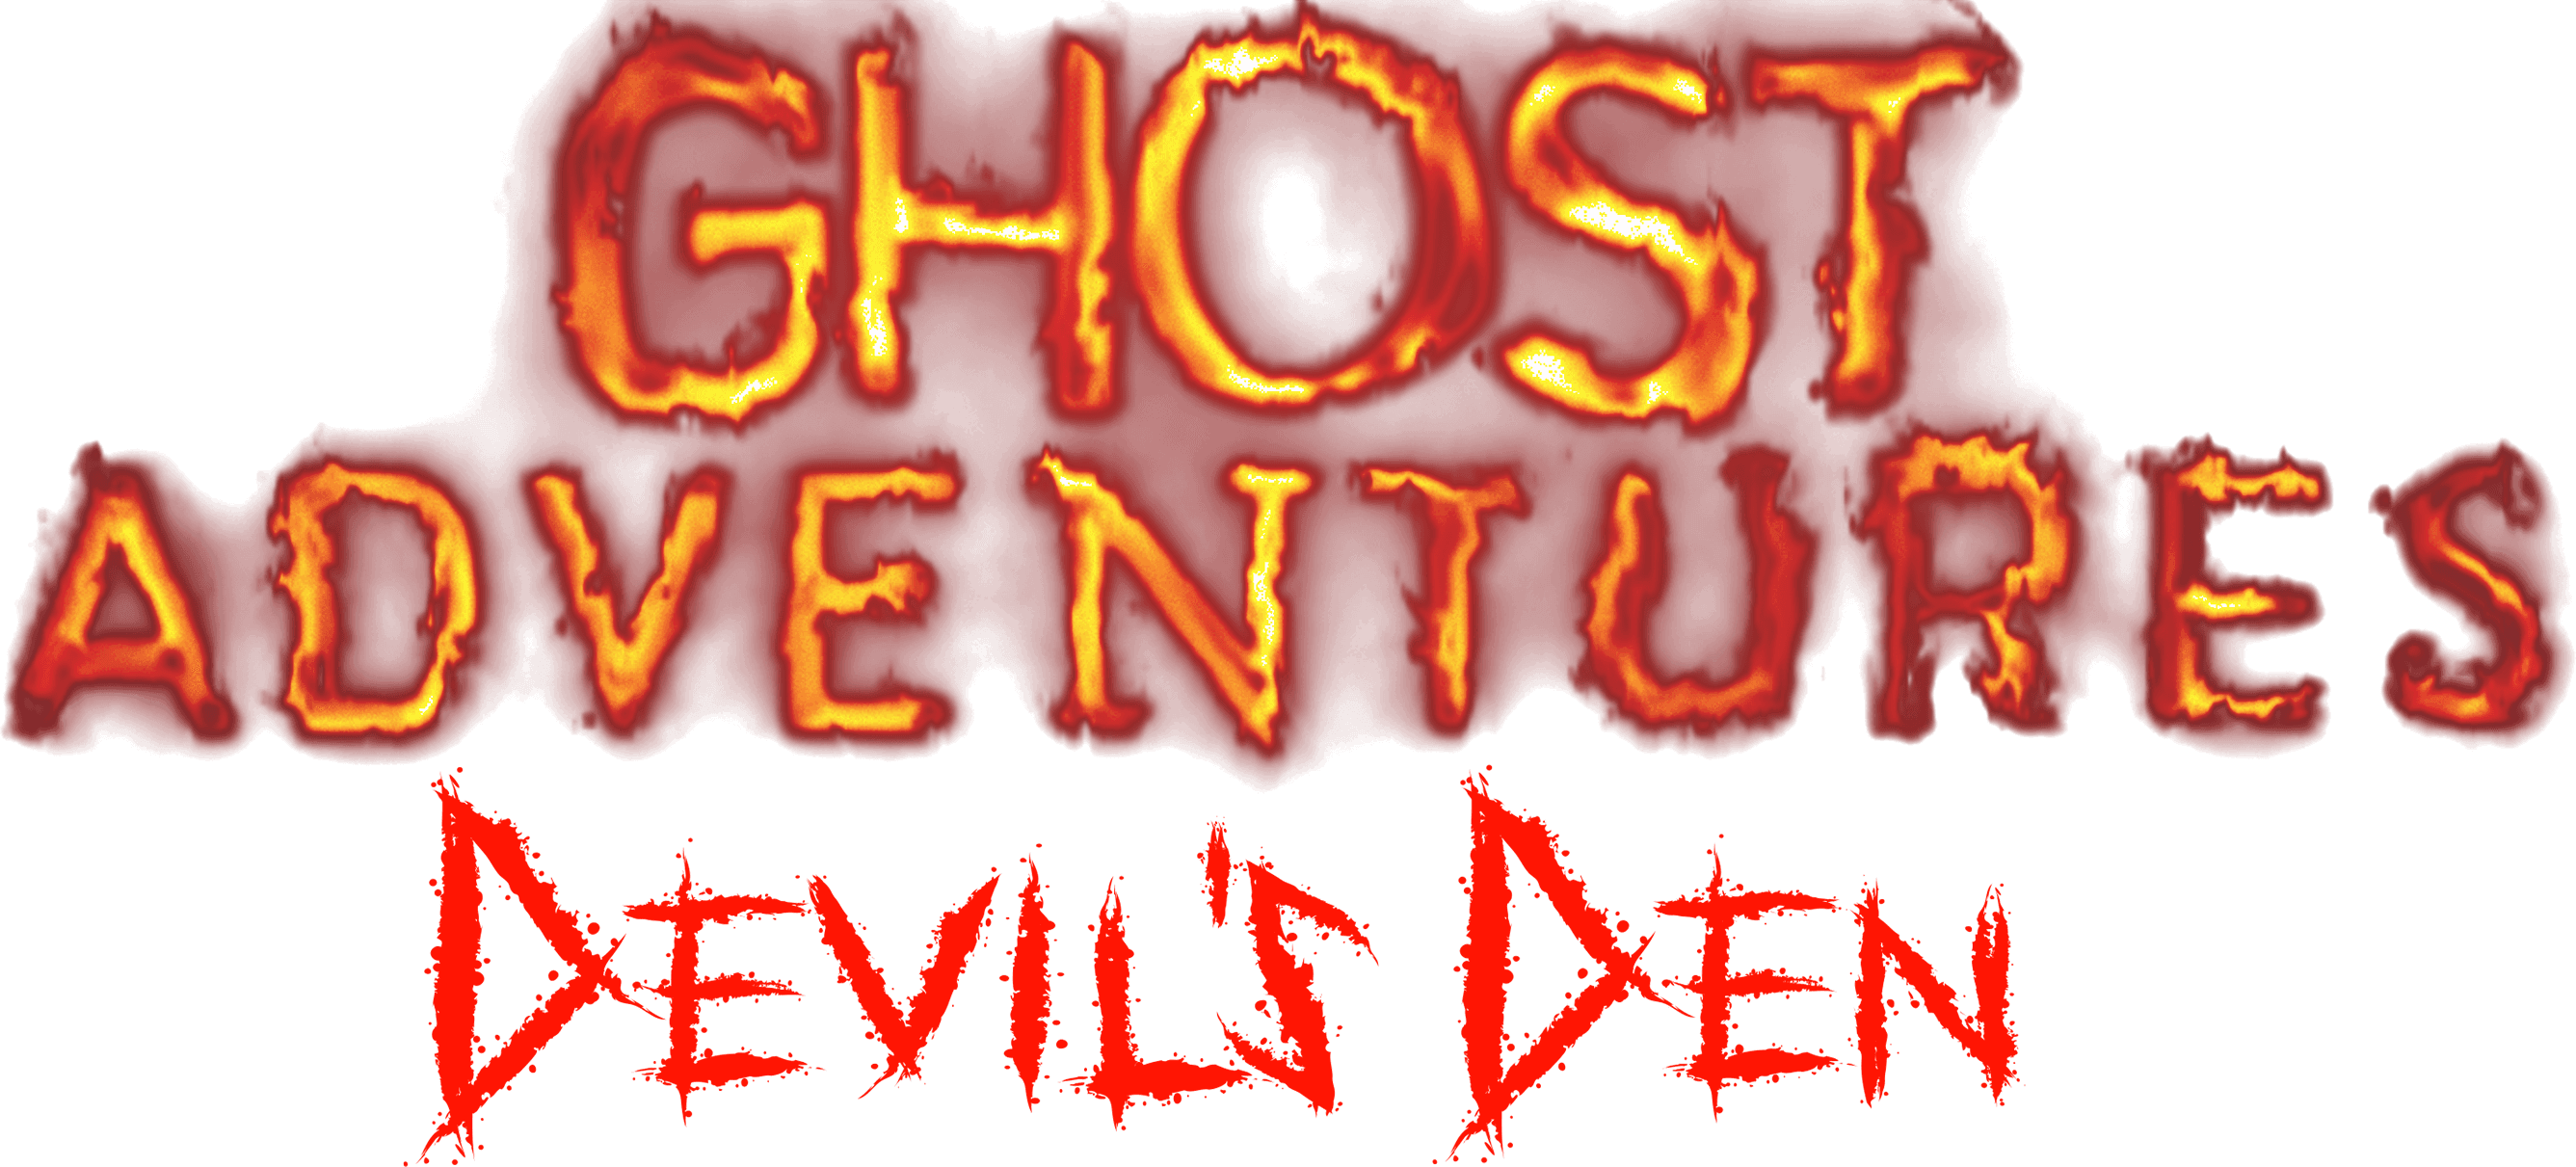 Ghost Adventures: Devil's Den logo